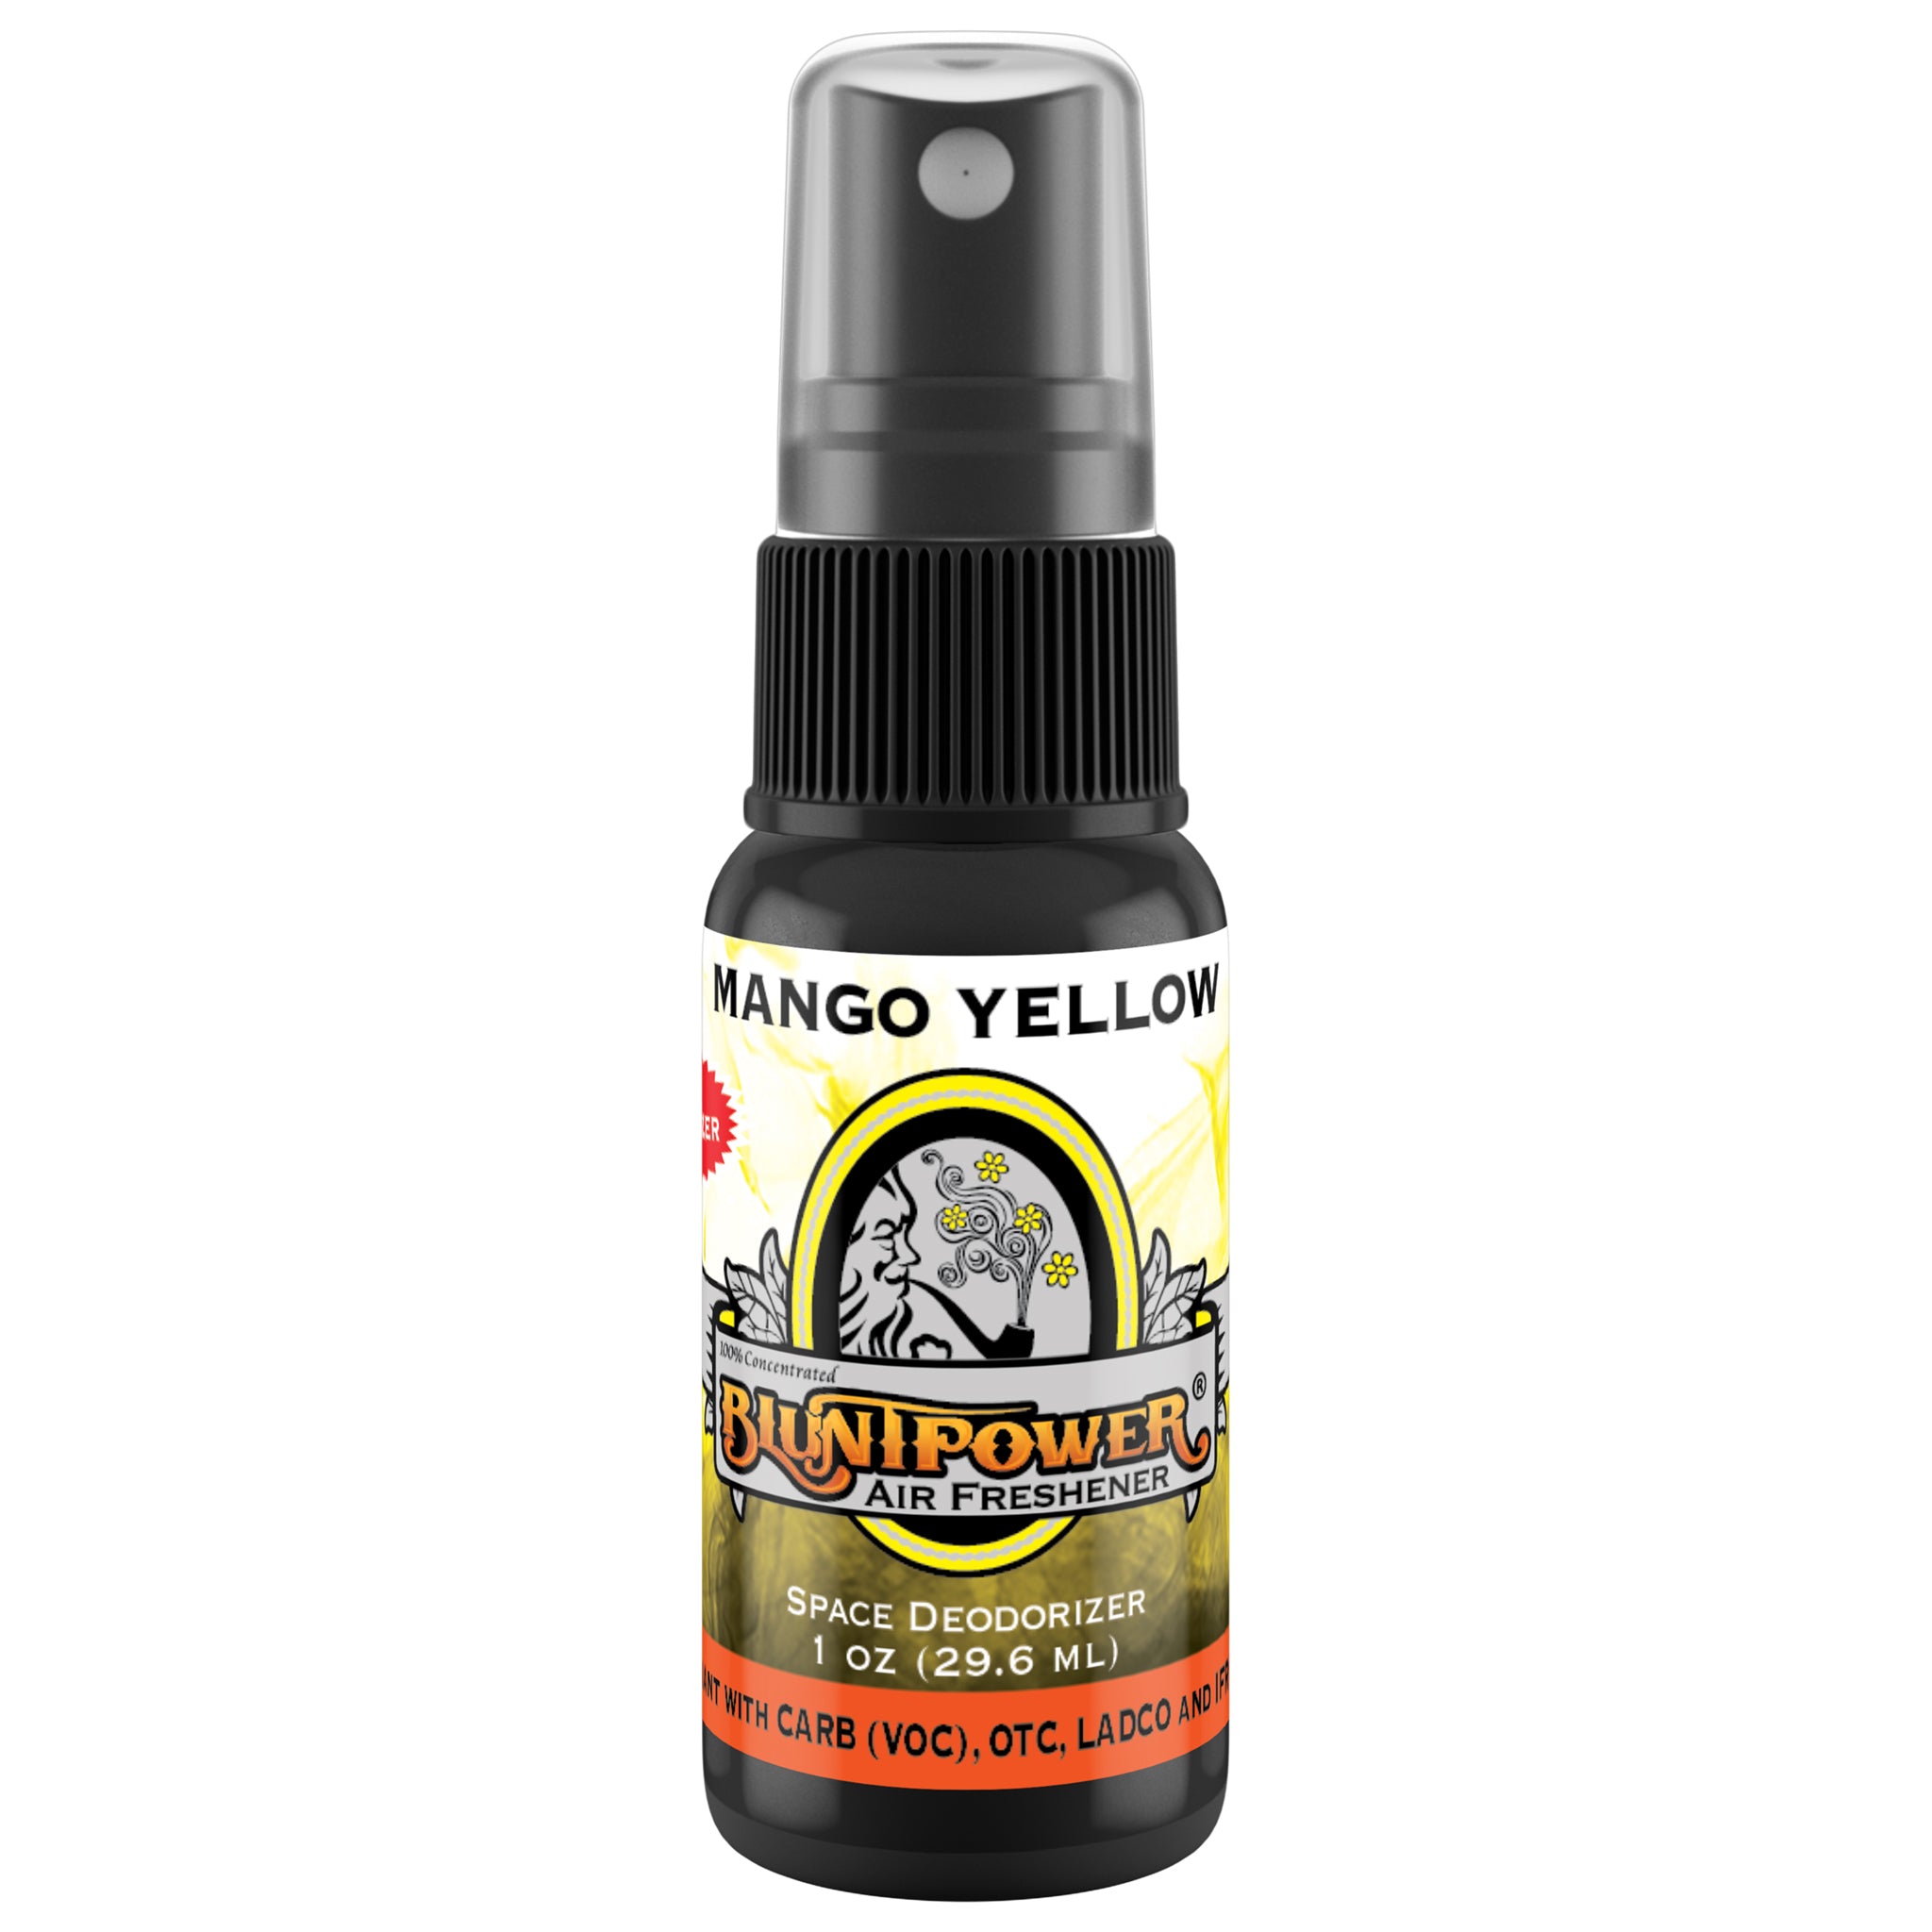 NEW BluntPower Mini Air Fresheners (1 FL OZ) Fragrance: Mango Yellow